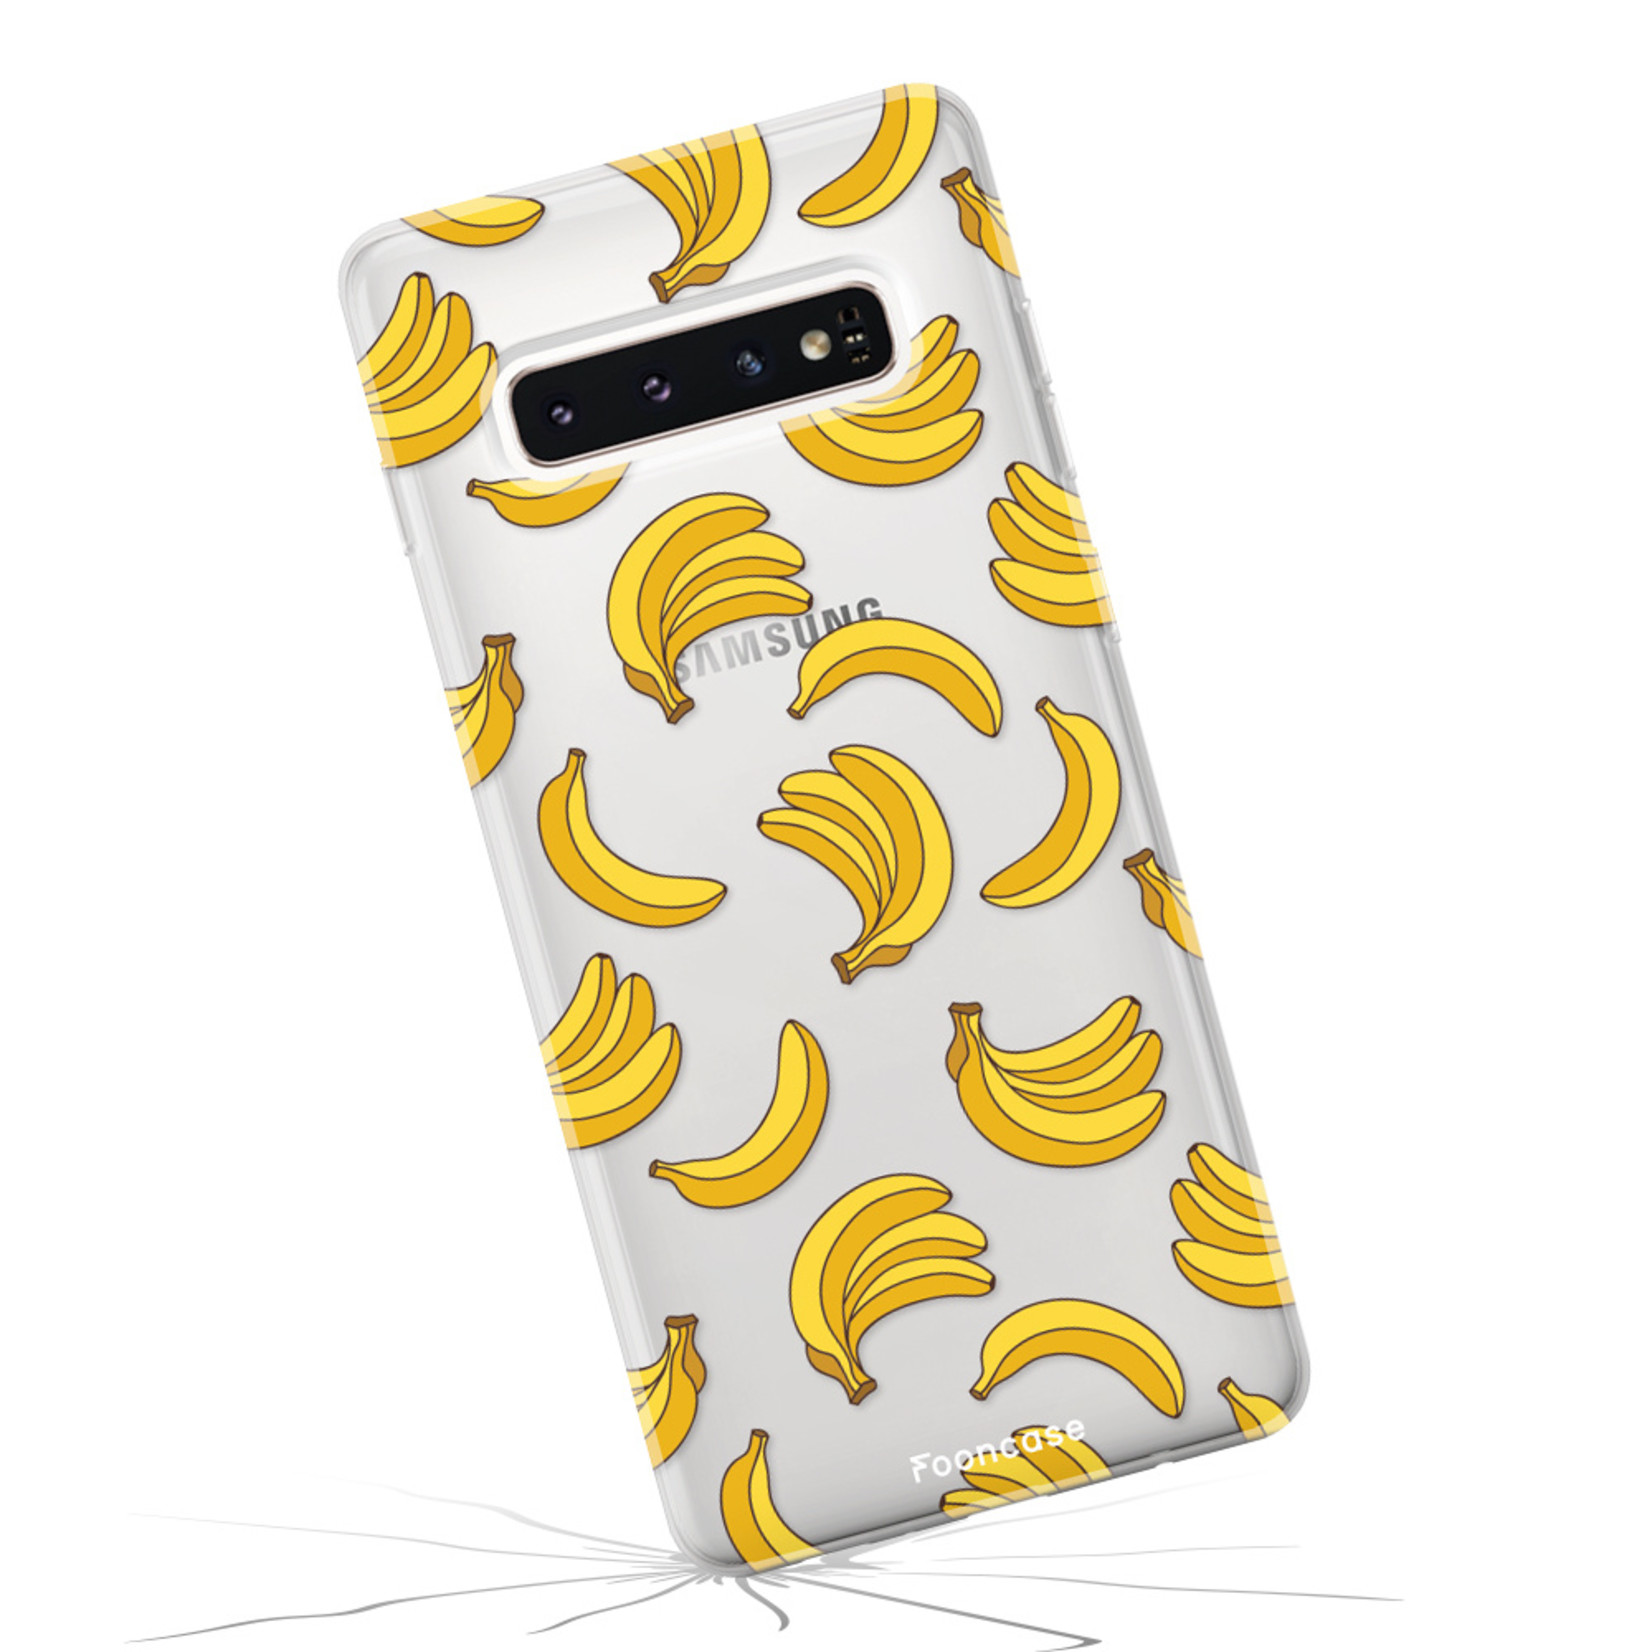 FOONCASE Samsung Galaxy S10 hoesje TPU Soft Case - Back Cover - Bananas / Banaan / Bananen